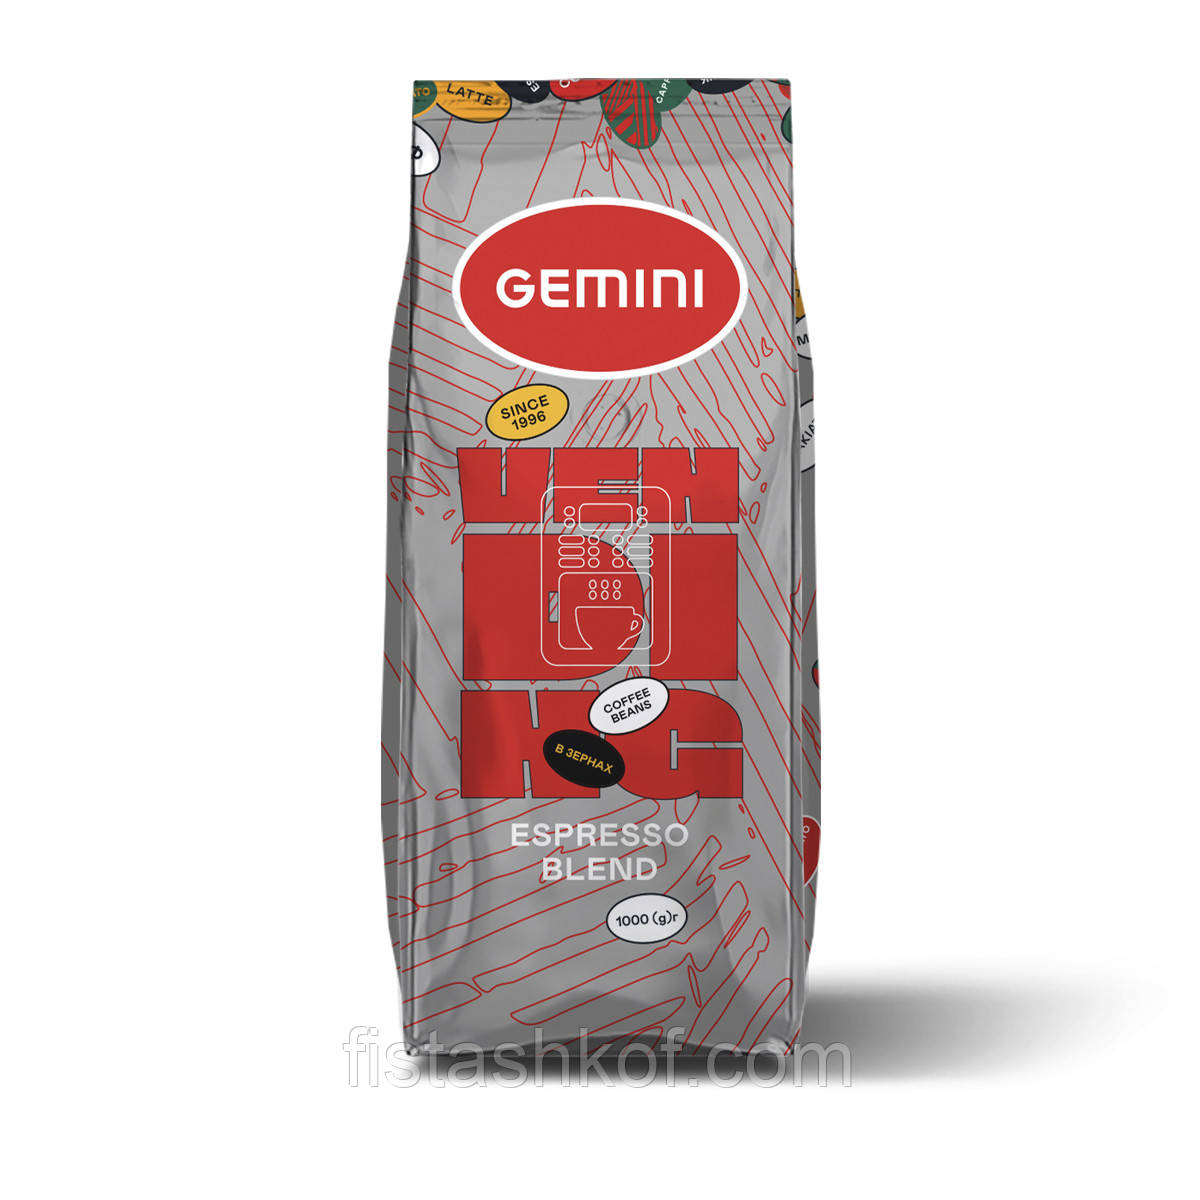 Gemini Espresso Vending Кава 1кг. (зерно), фото 1